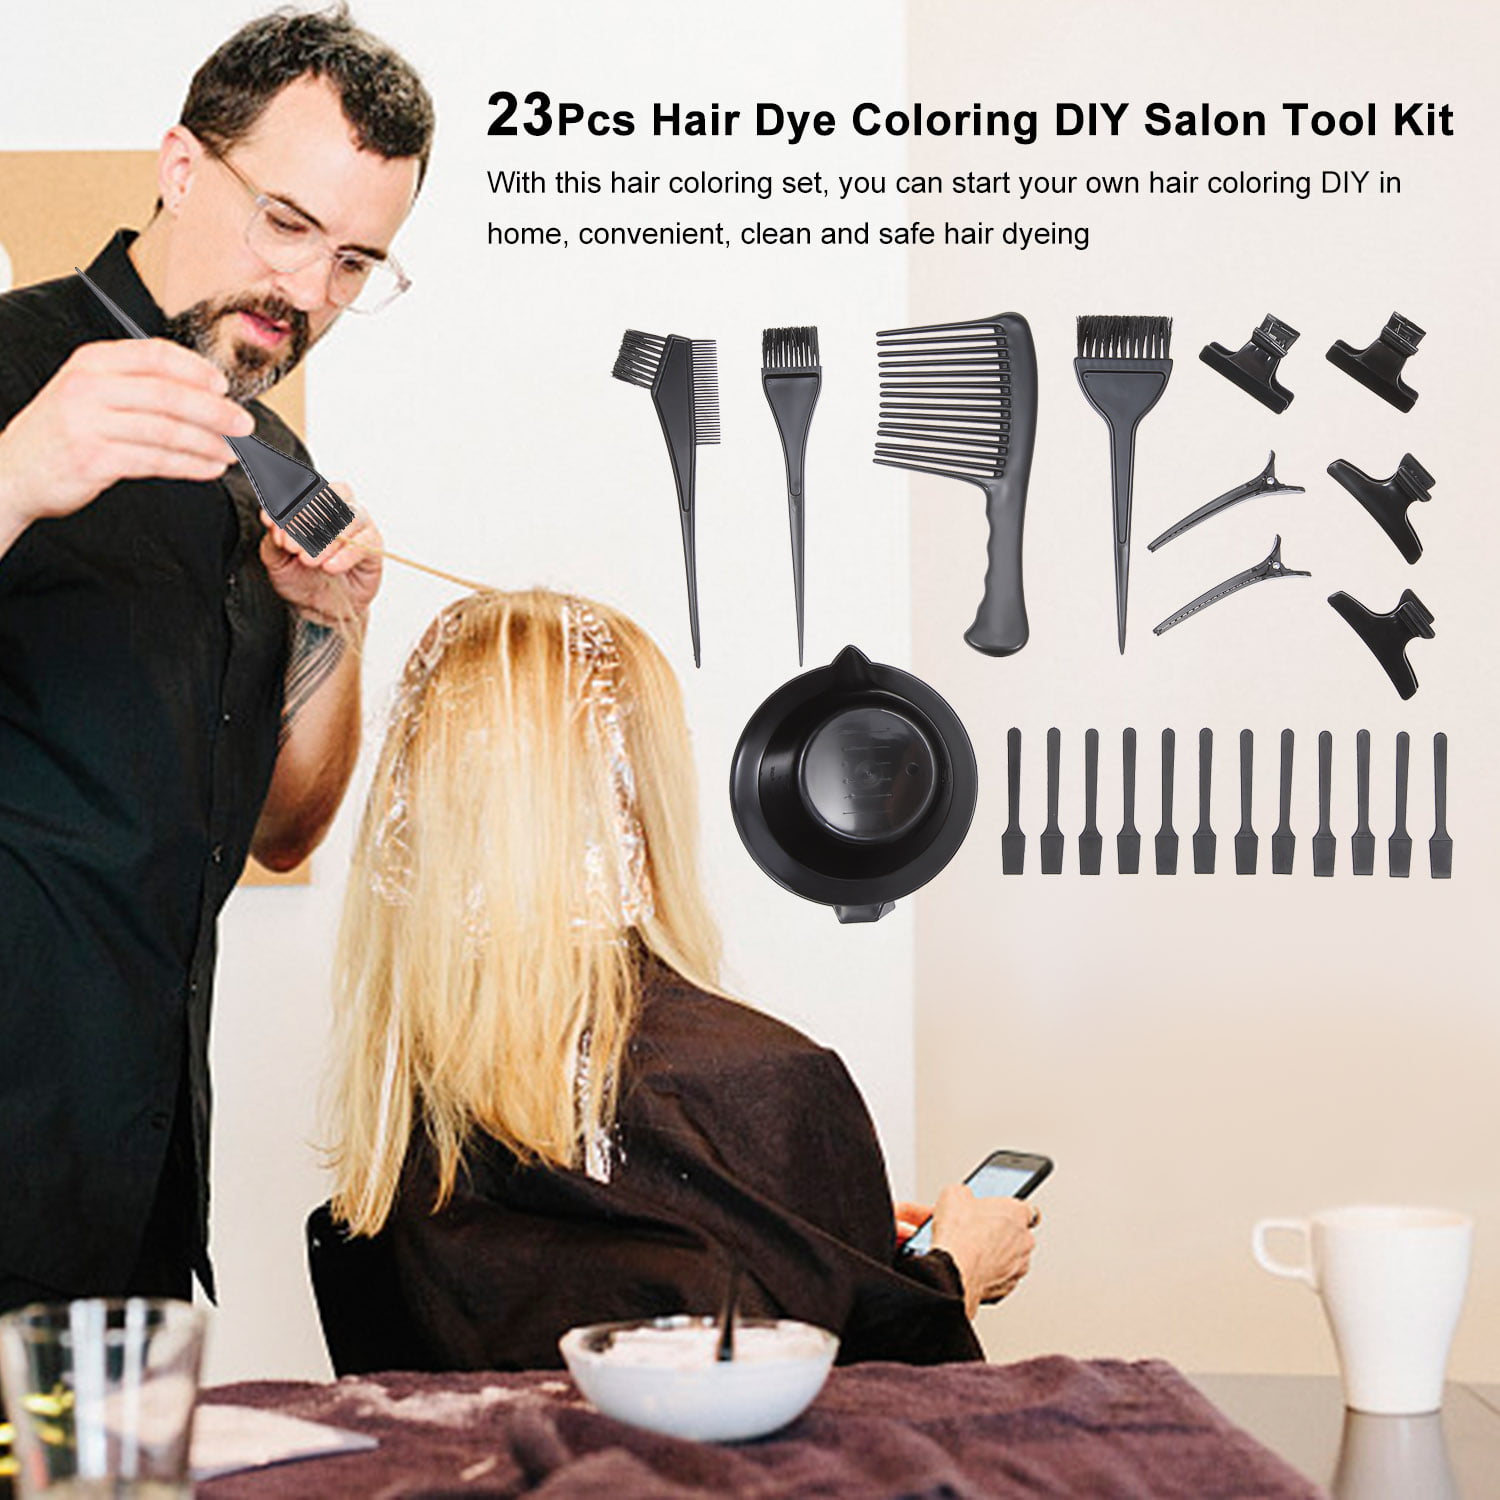 23Pcs Hair Dye Coloring DIY Salon Tool Kit Hair Tinting Bowl Dye Brush Comb  Hair Clips Mixing Spatulas Hair Color Dye Tint Tool Set 